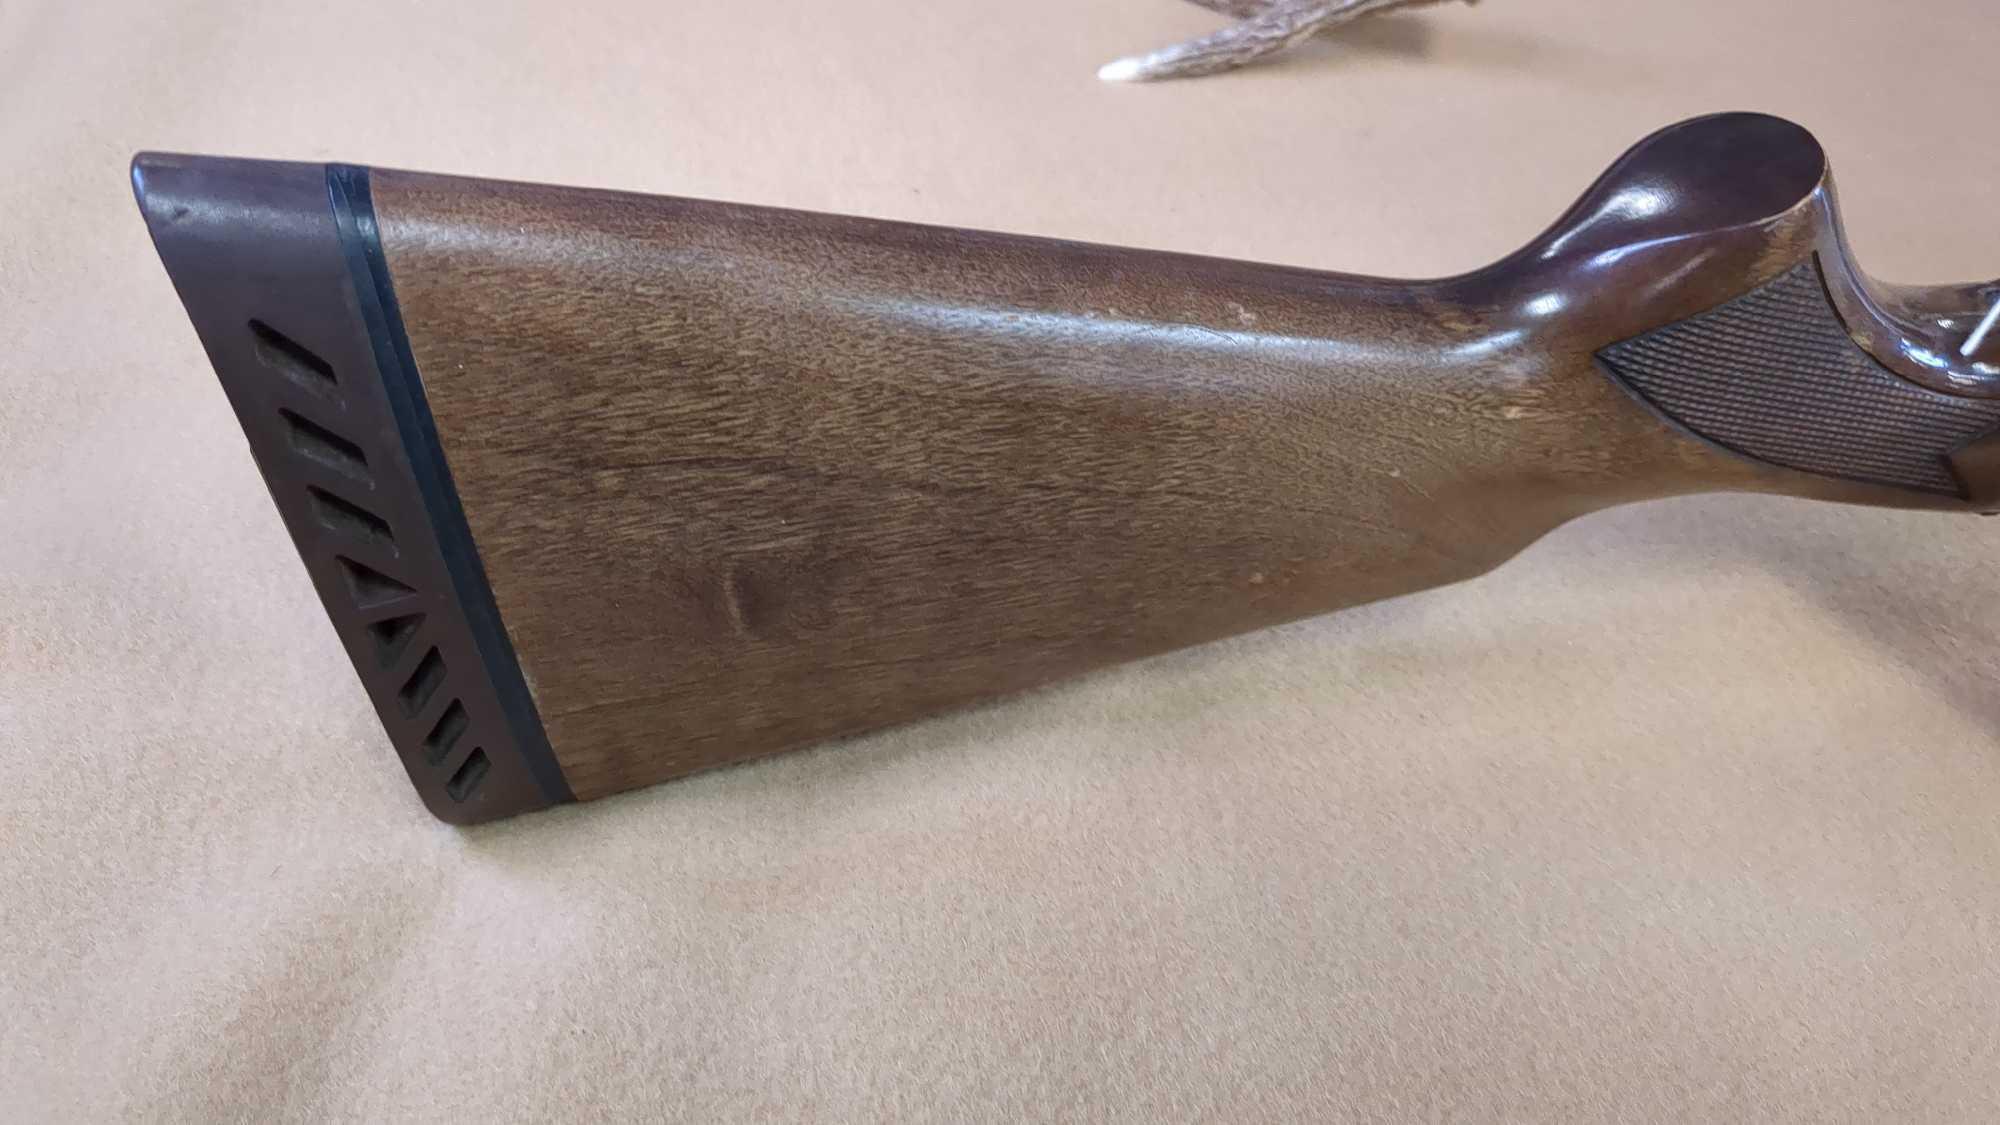 MOSSBERG MODEL 500A 2 3/4"-3" 12-GAUGE PUMP SHOTGUN